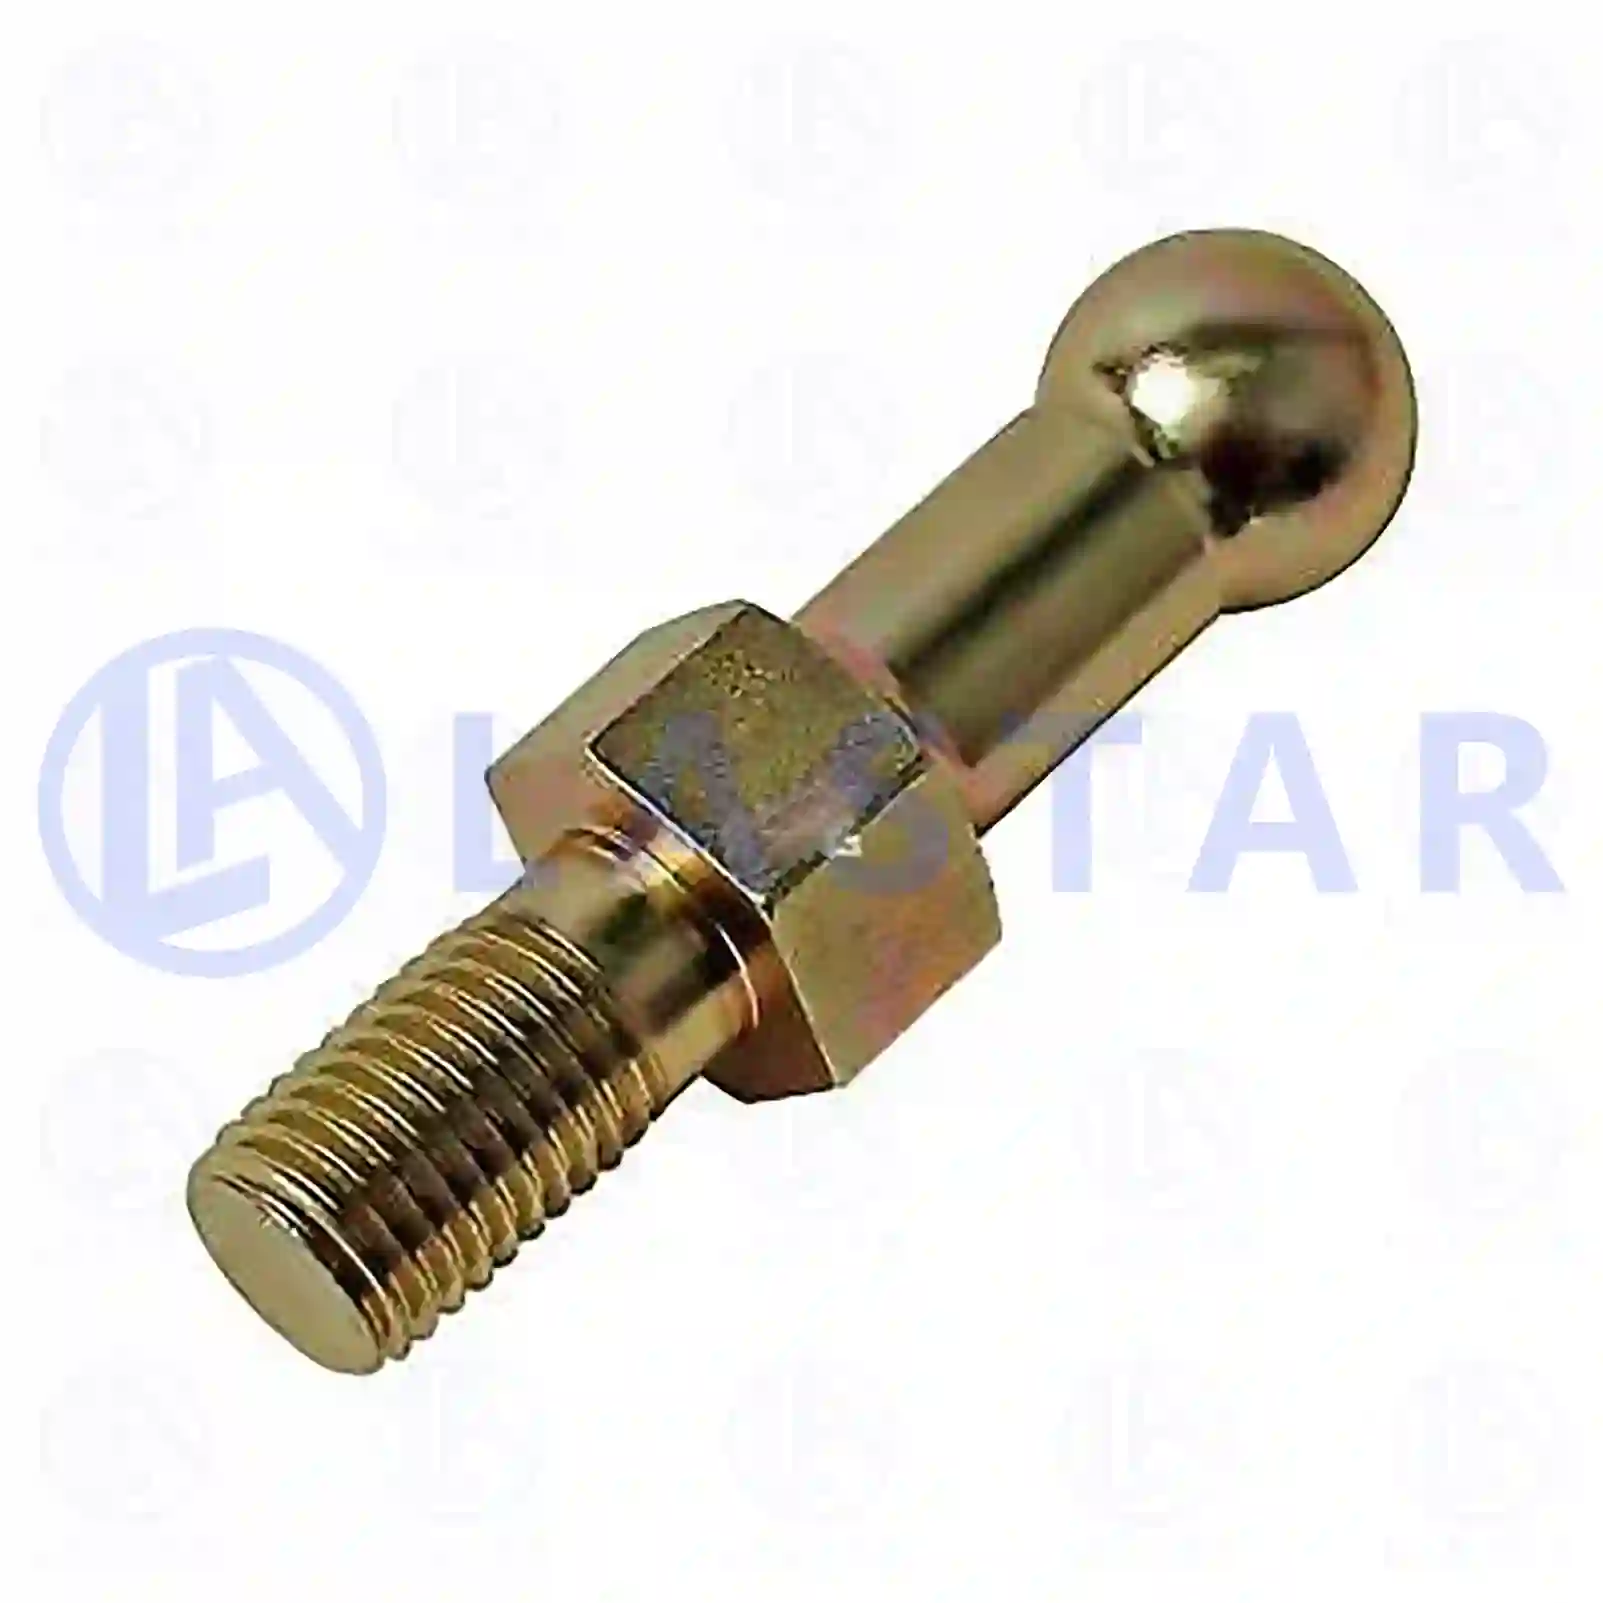 Clutch Housing Ball screw, la no: 77722675 ,  oem no:1299366 Lastar Spare Part | Truck Spare Parts, Auotomotive Spare Parts